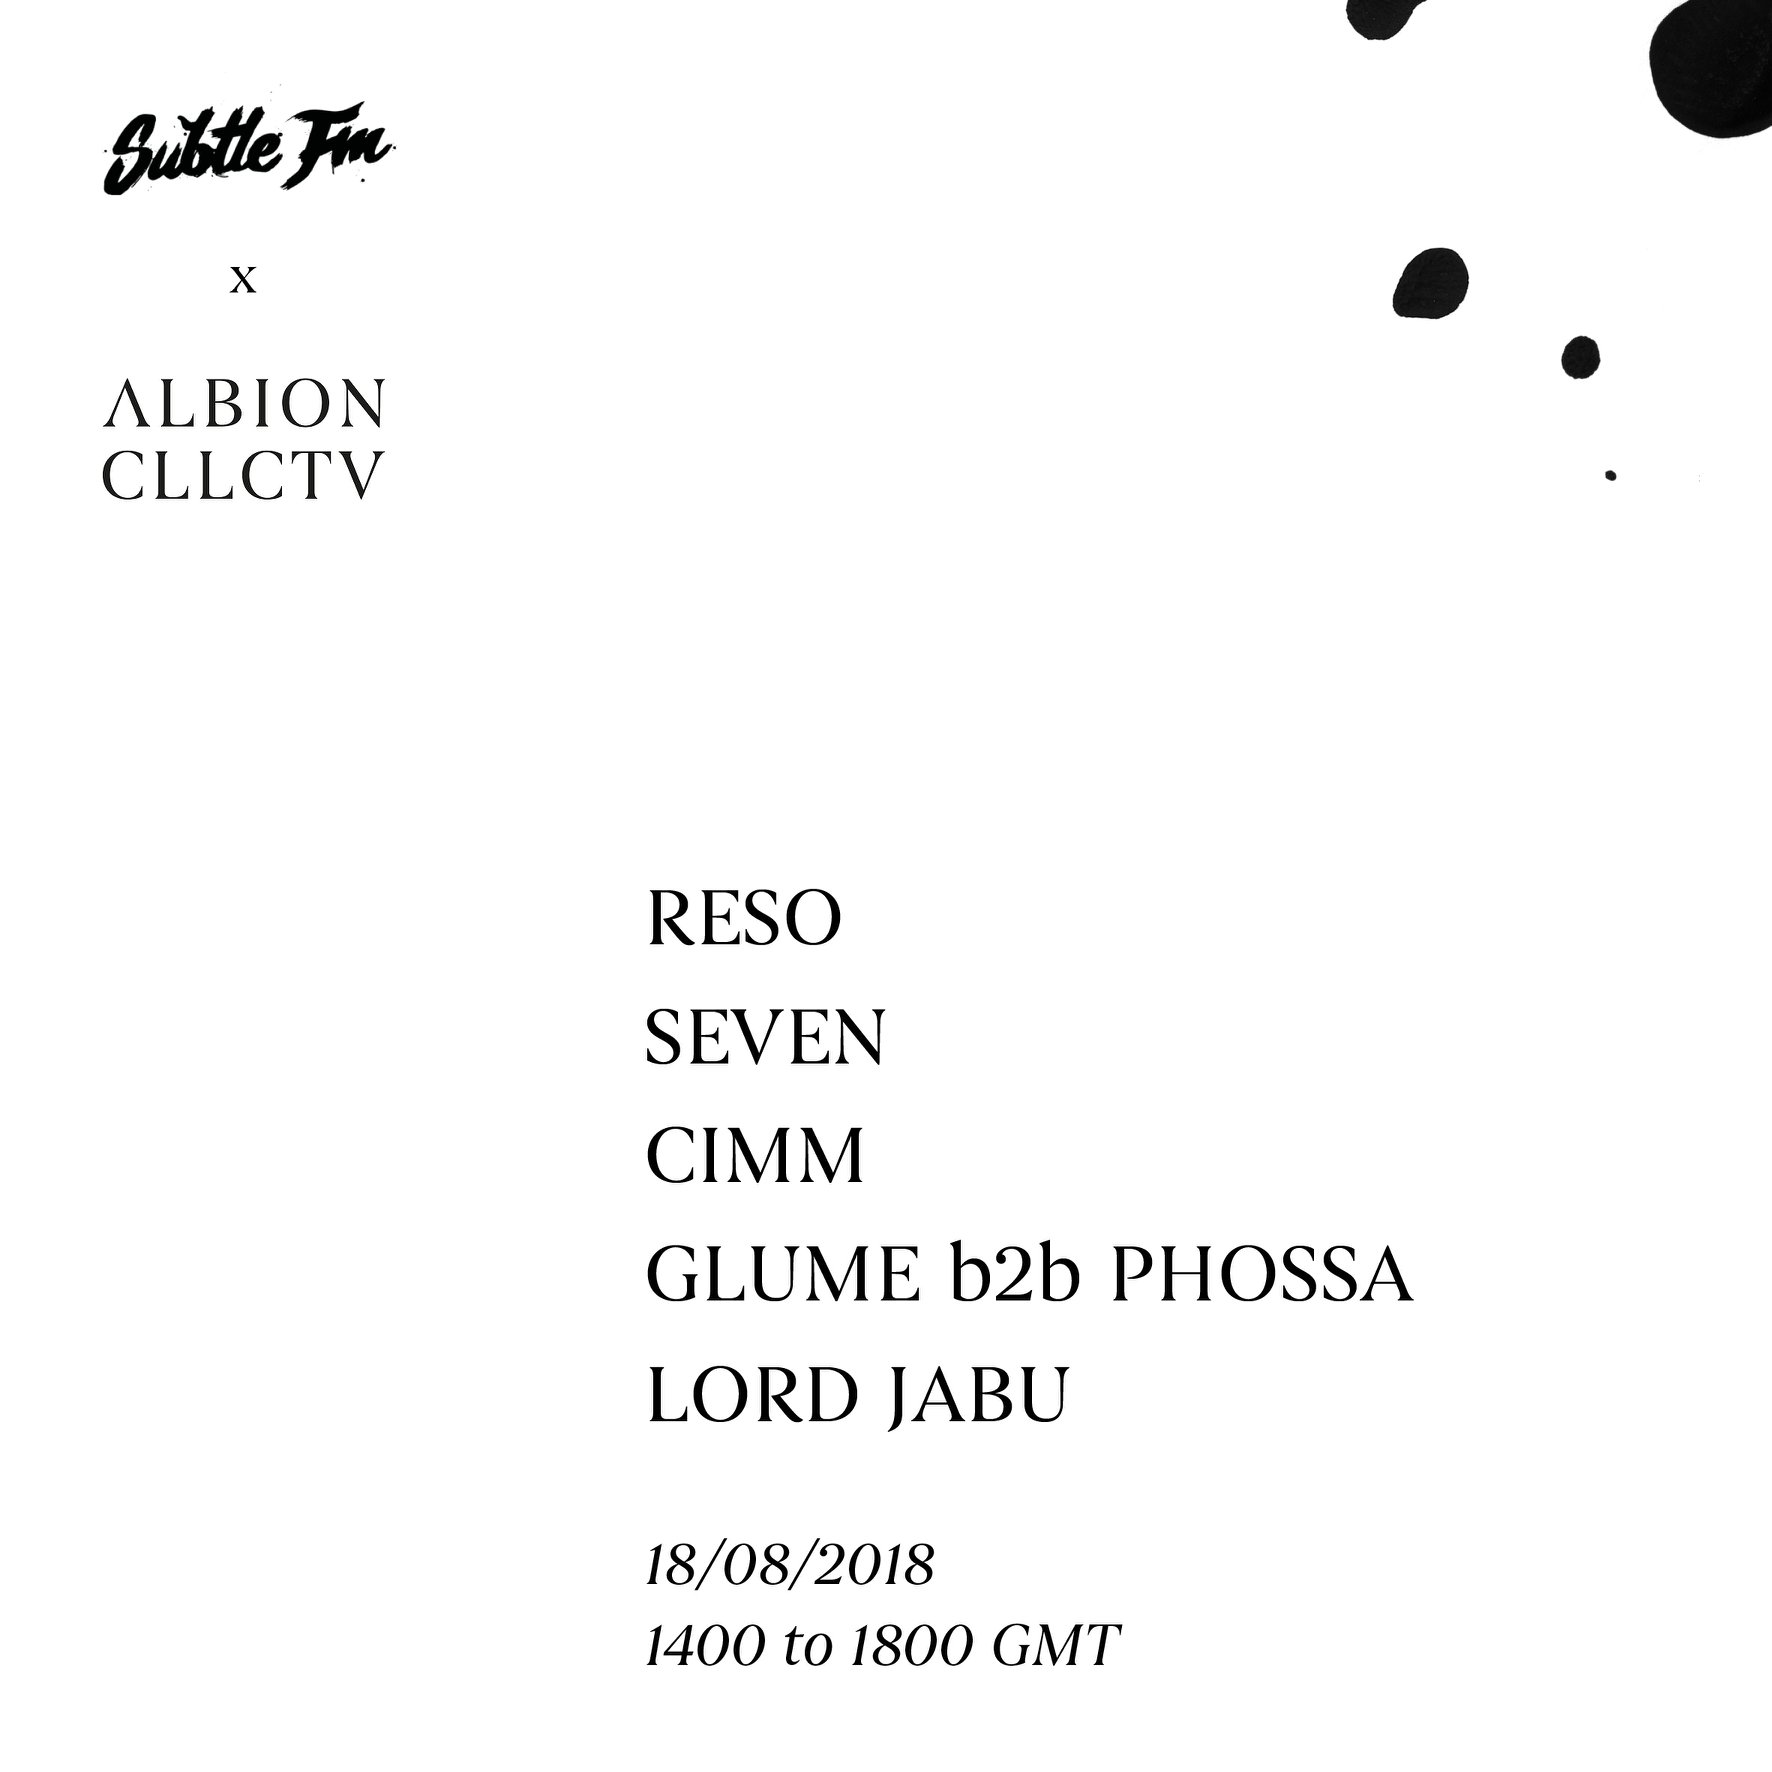 Albion Collective Takeover Part 1 w/ Lord Jabu, Glume & Phossa - Subtle FM 18/08/18